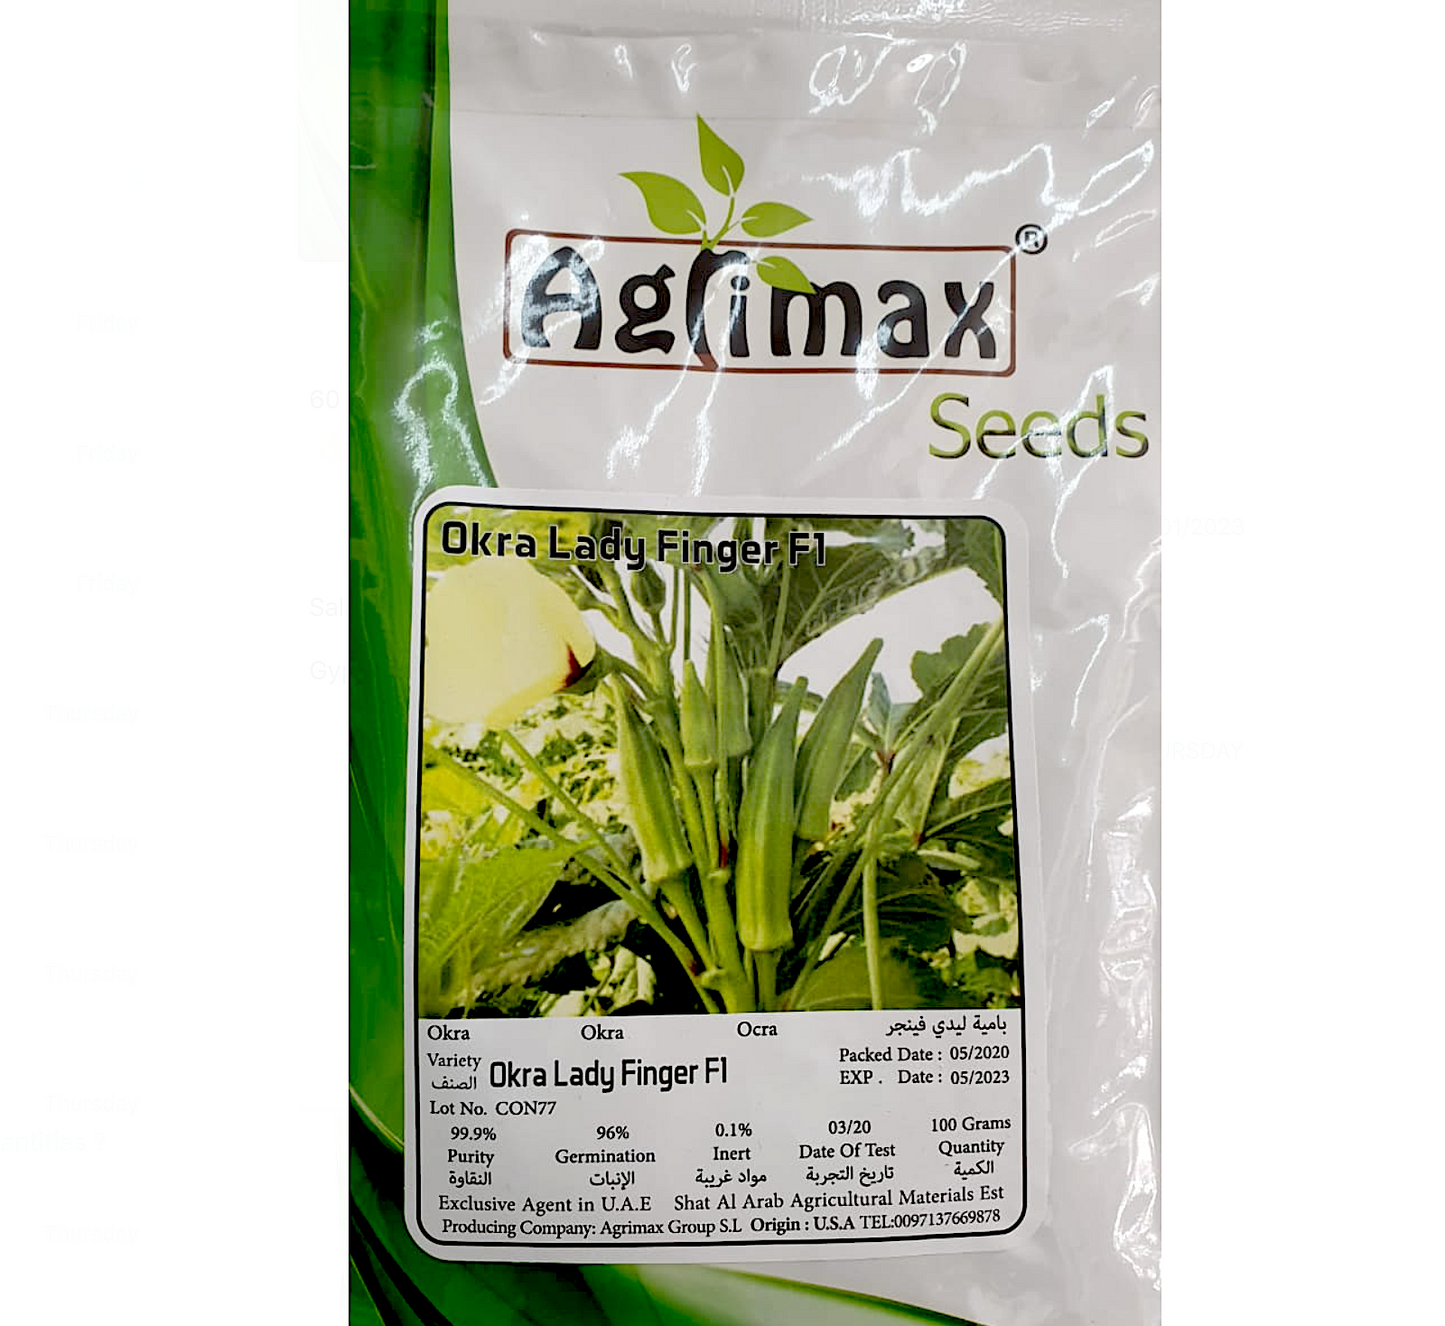 Okra Vegetable Seeds "Lady Finger F1" by Agrimax Spain 100gm